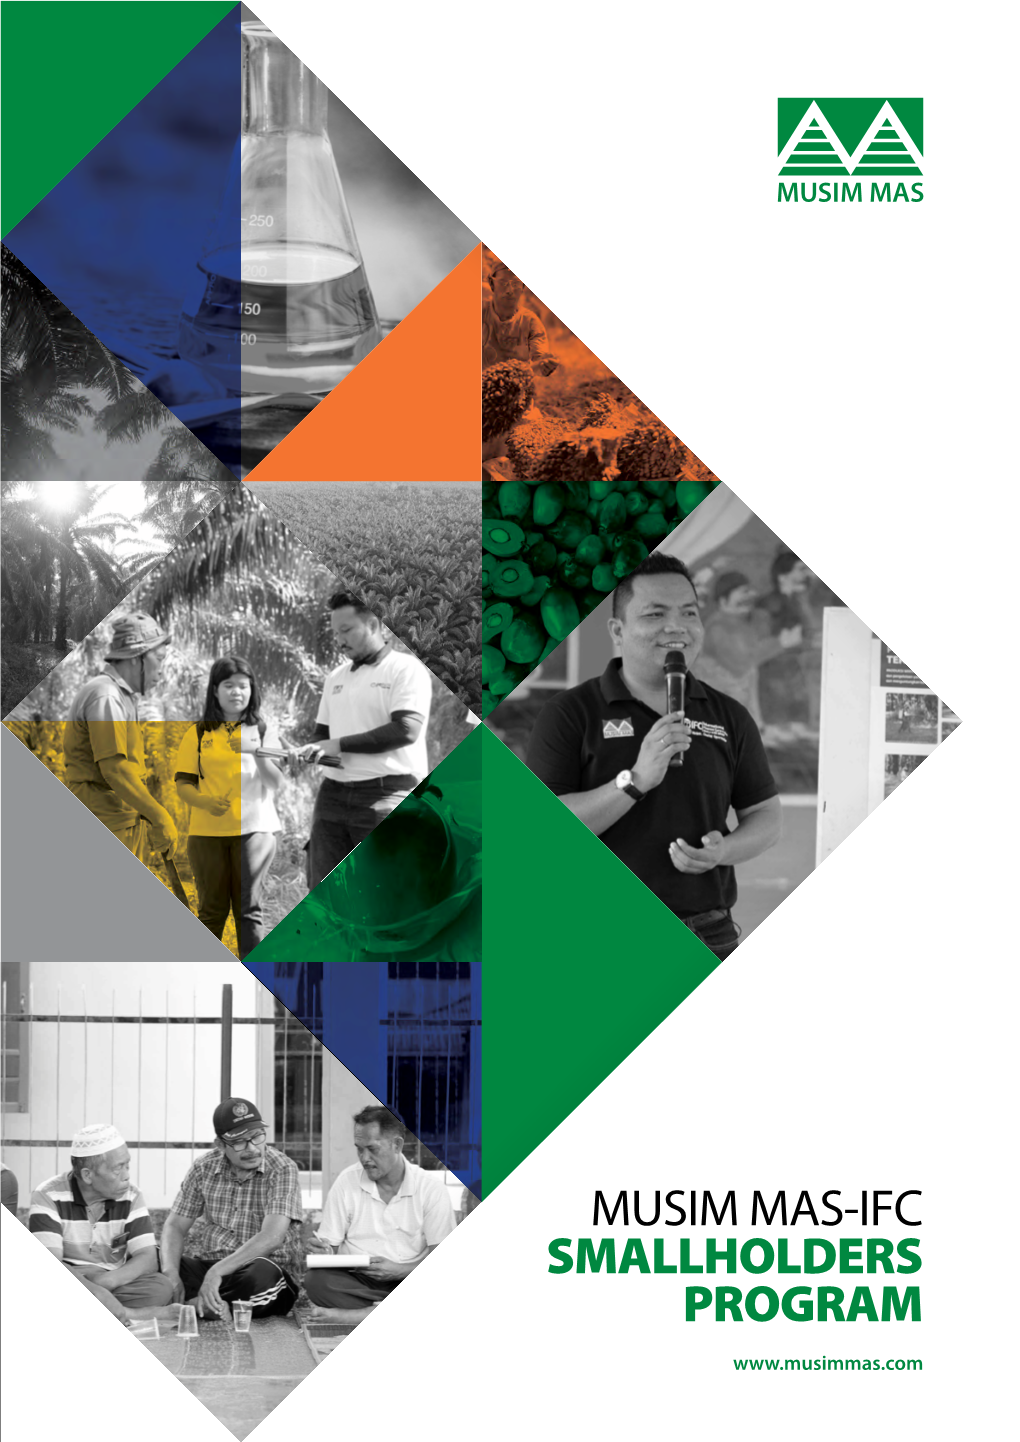 MUSIM MAS-IFC SMALLHOLDERS PROGRAM Why Should We Focus on Independent Smallholders?